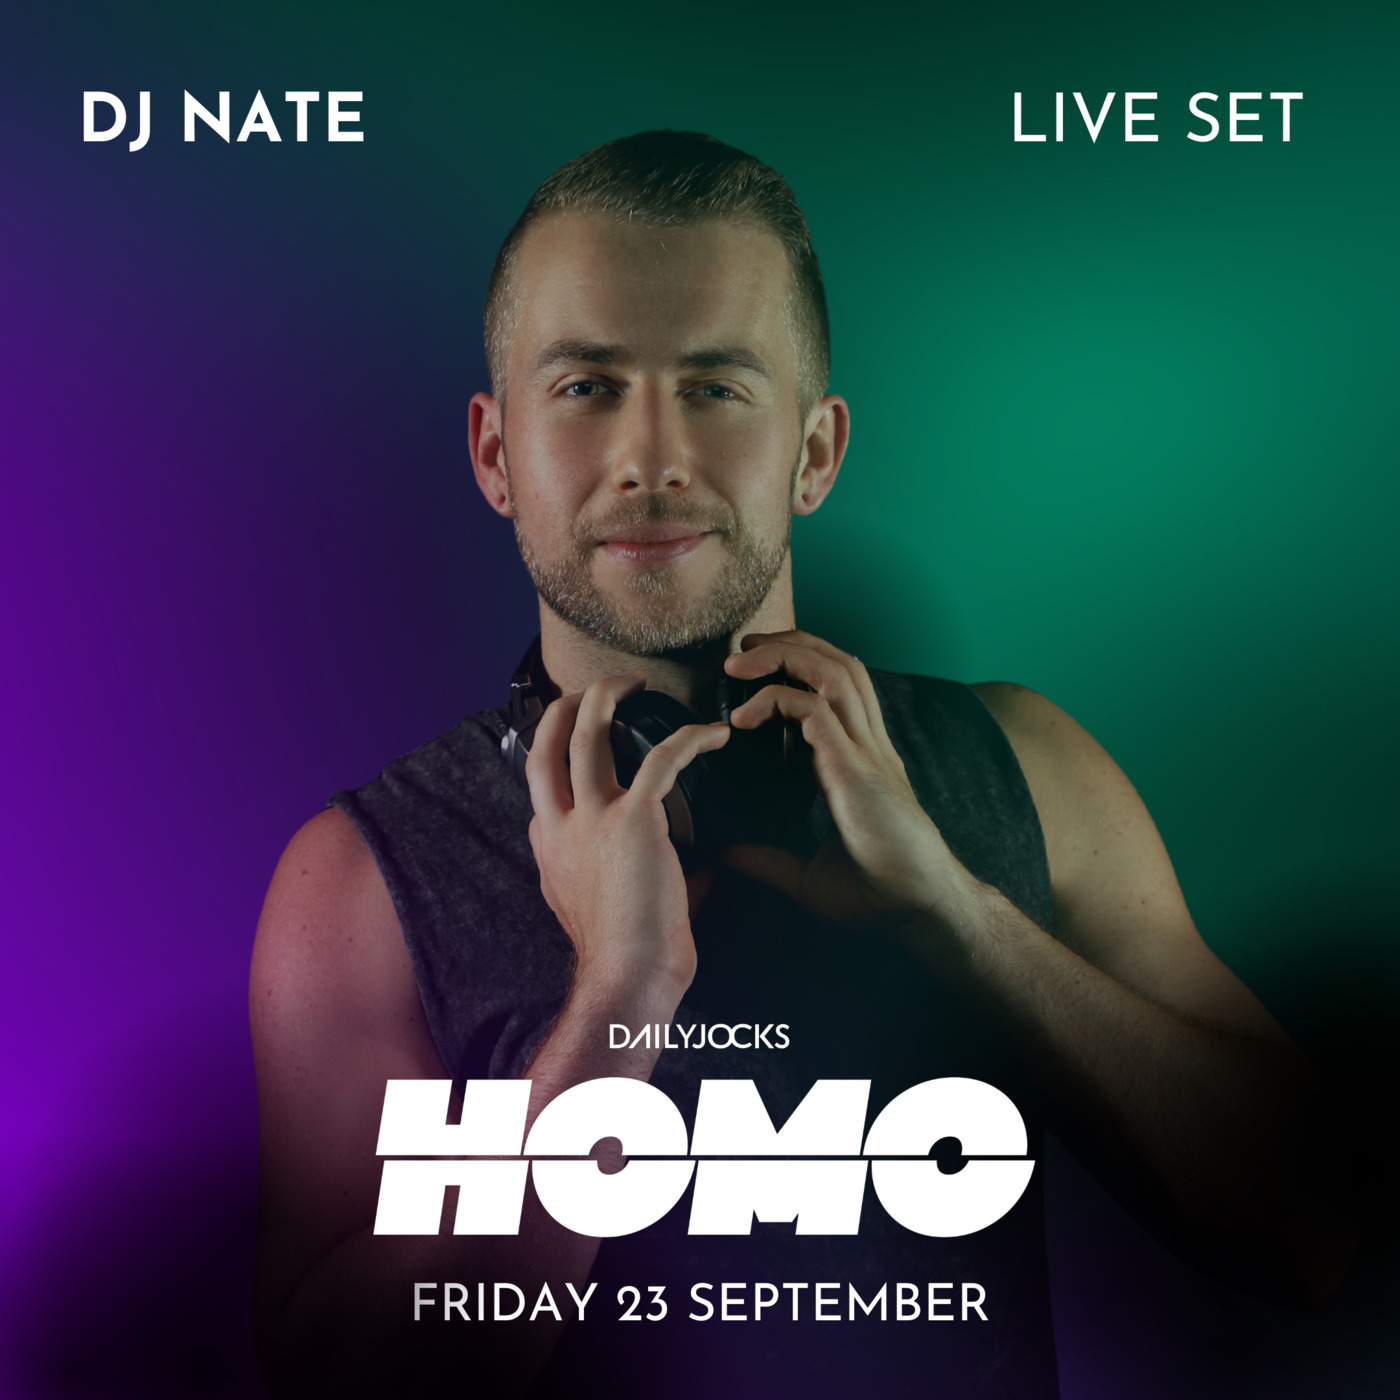 Episode 42: Live Set - Recorded for HOMO Events in Melbourne NATE Sep 22